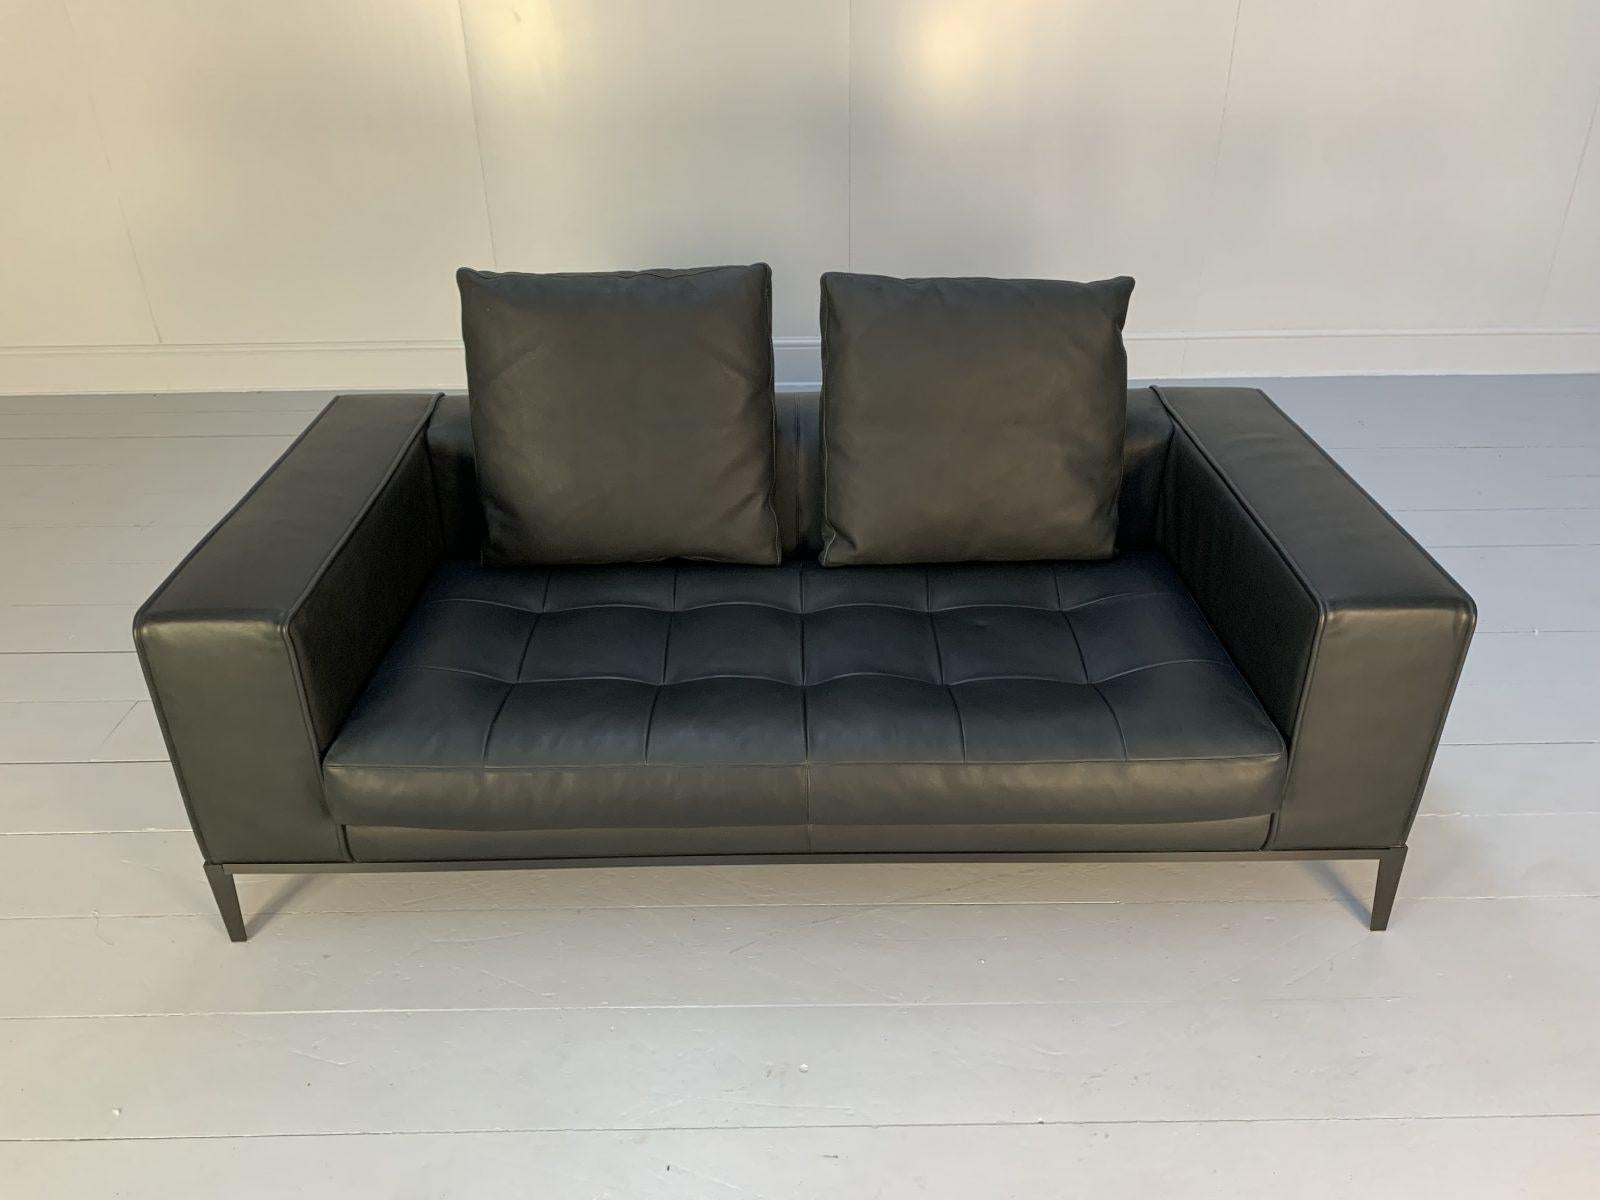 B&B Italia “Simplex ” 2.5-Seat Sofa – In Charcoal “Gamma” Leather In Good Condition For Sale In Barrowford, GB